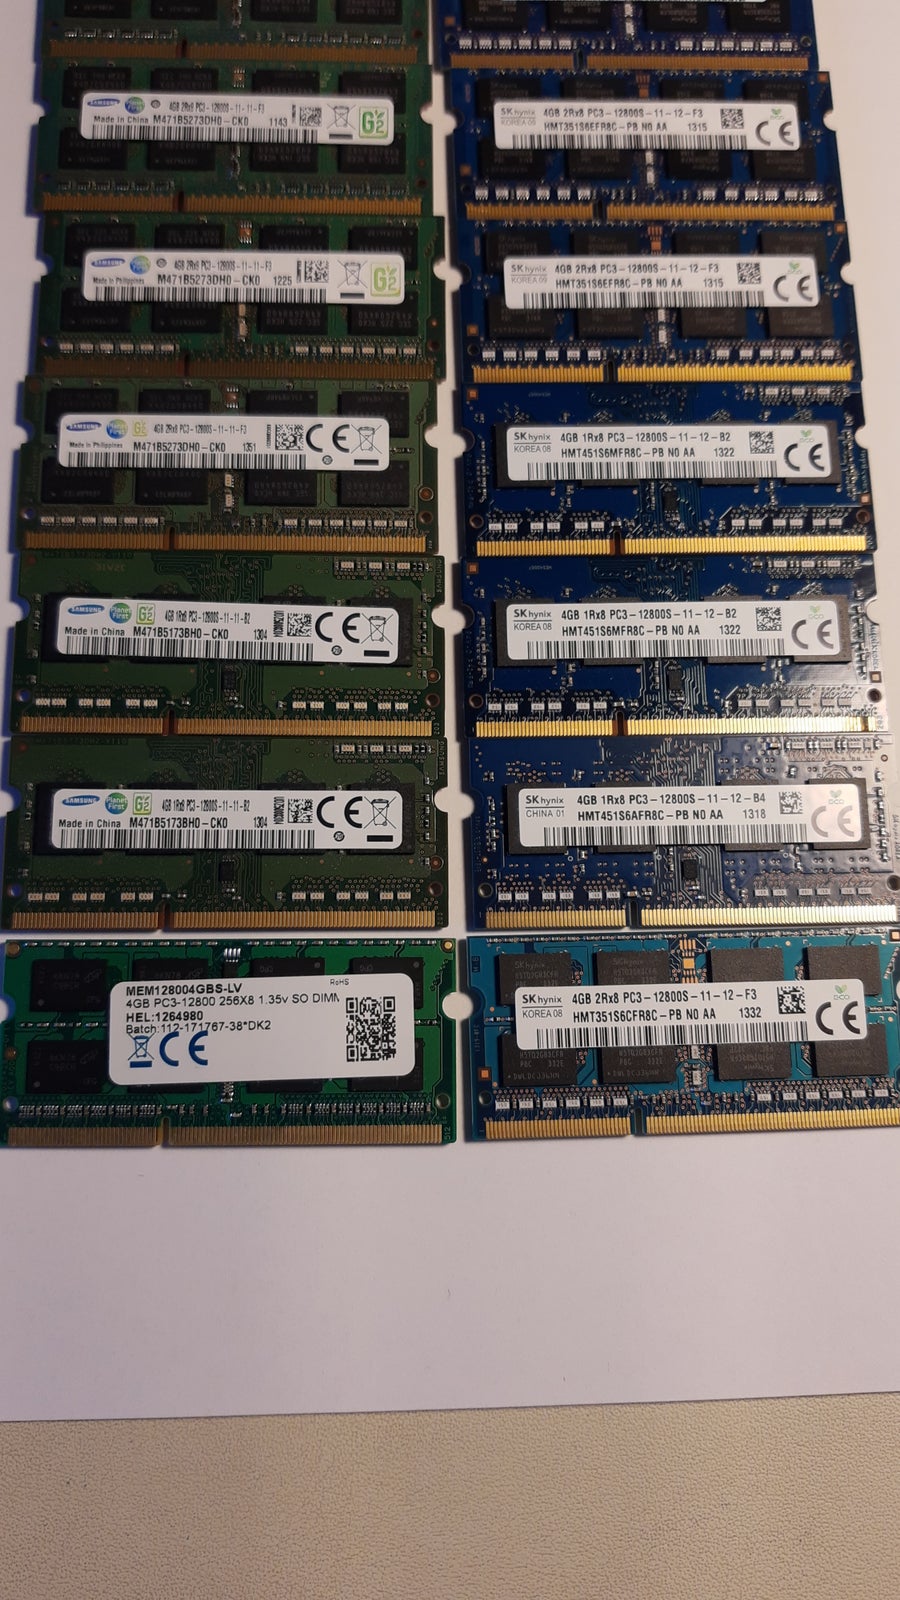 Blandet, 4 GB, DDR3 SDRAM